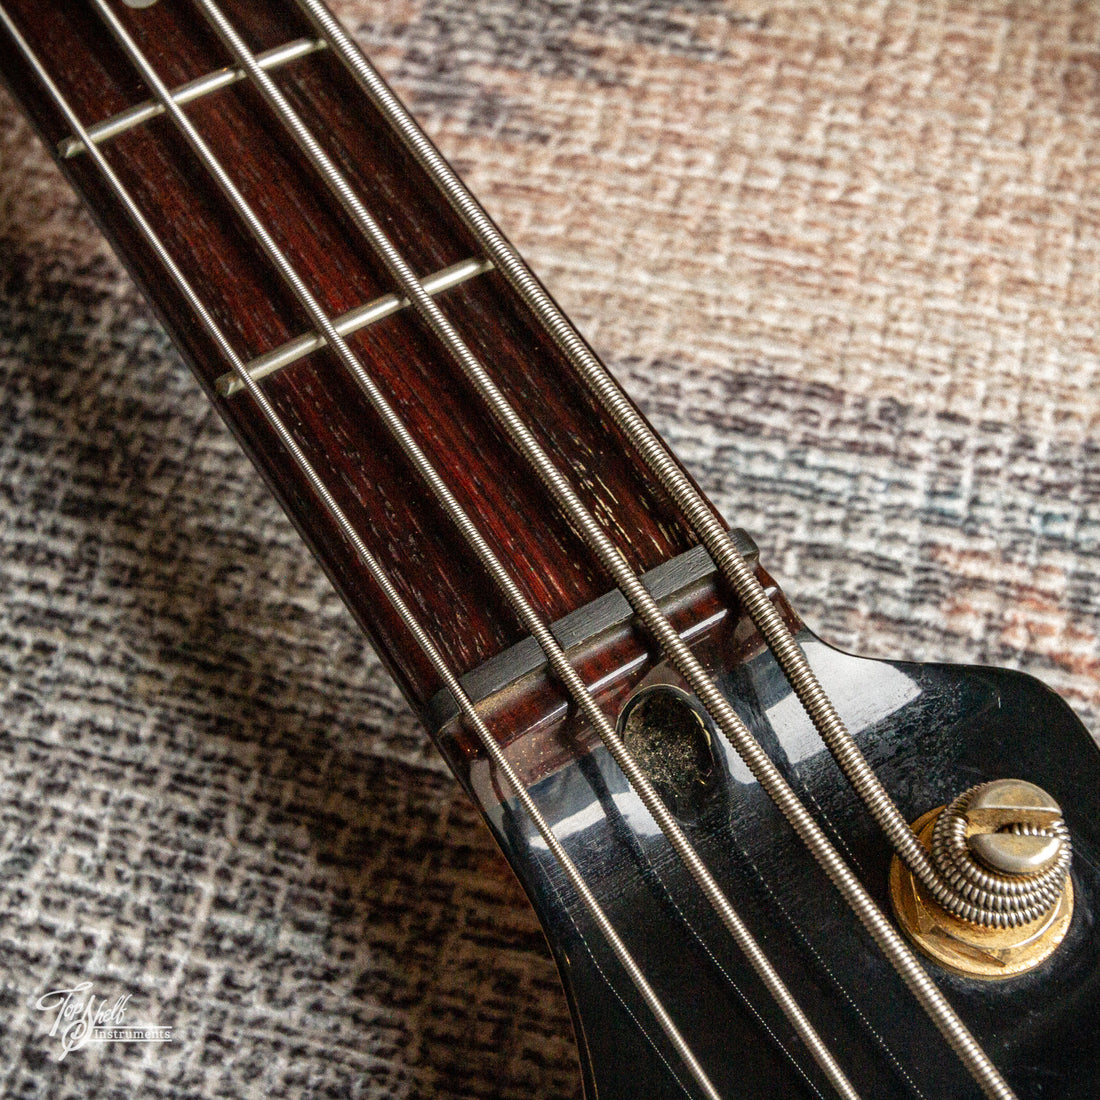 Fender Japan Boxer Series Jazz Bass Special Black 1989